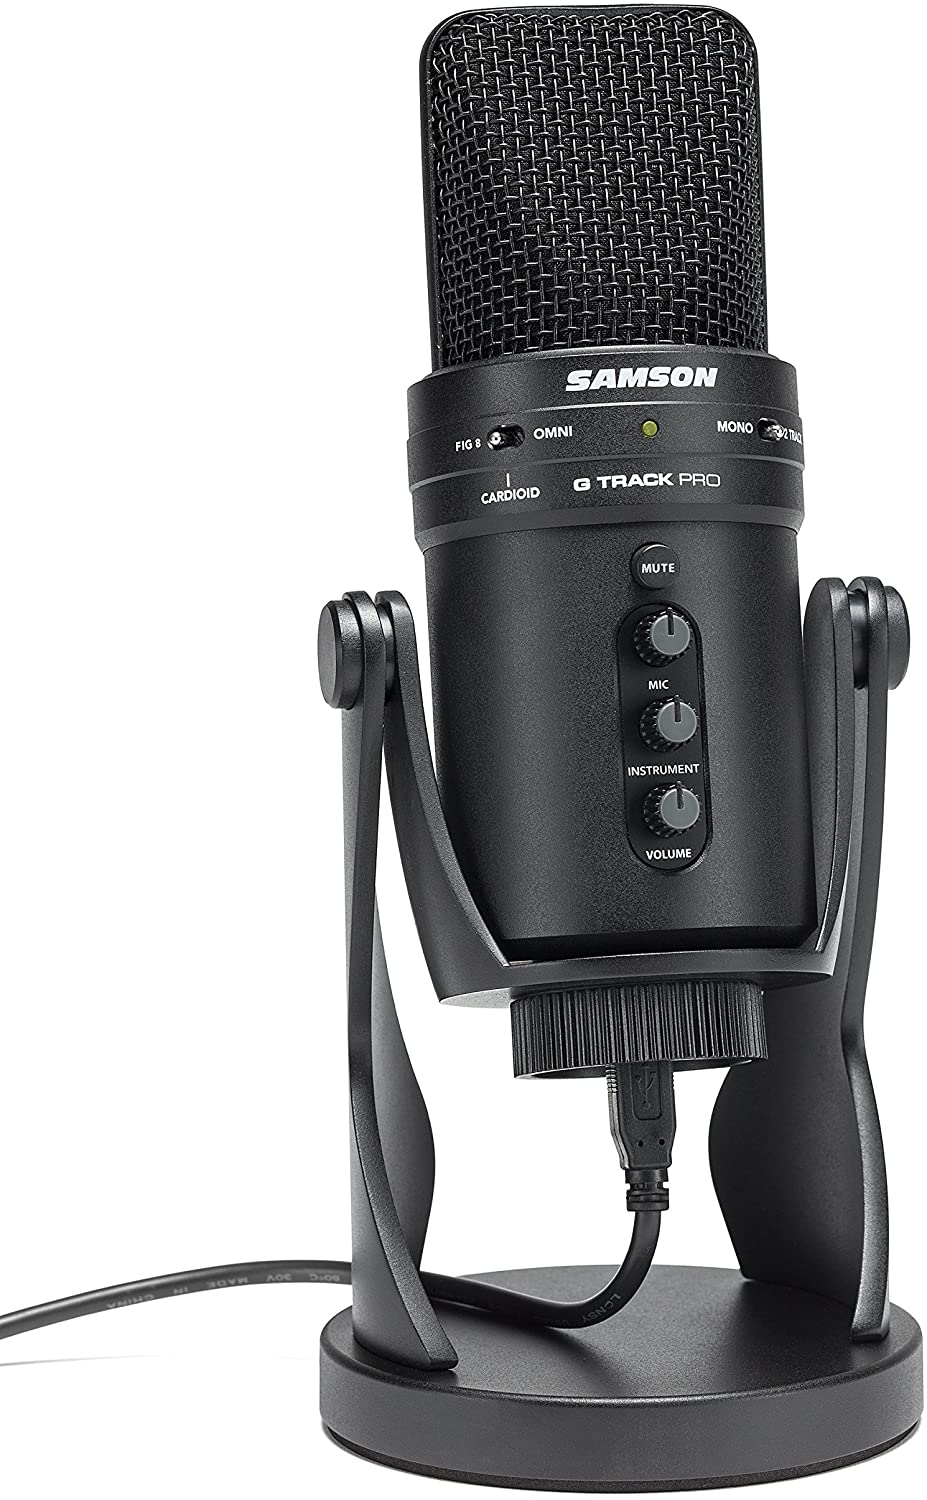 Samson Technologies Samson G-Track Pro Professional USB Condenser Microphone with Audio Interface, Black (SAGM1UPRO) - Pro-Distributing